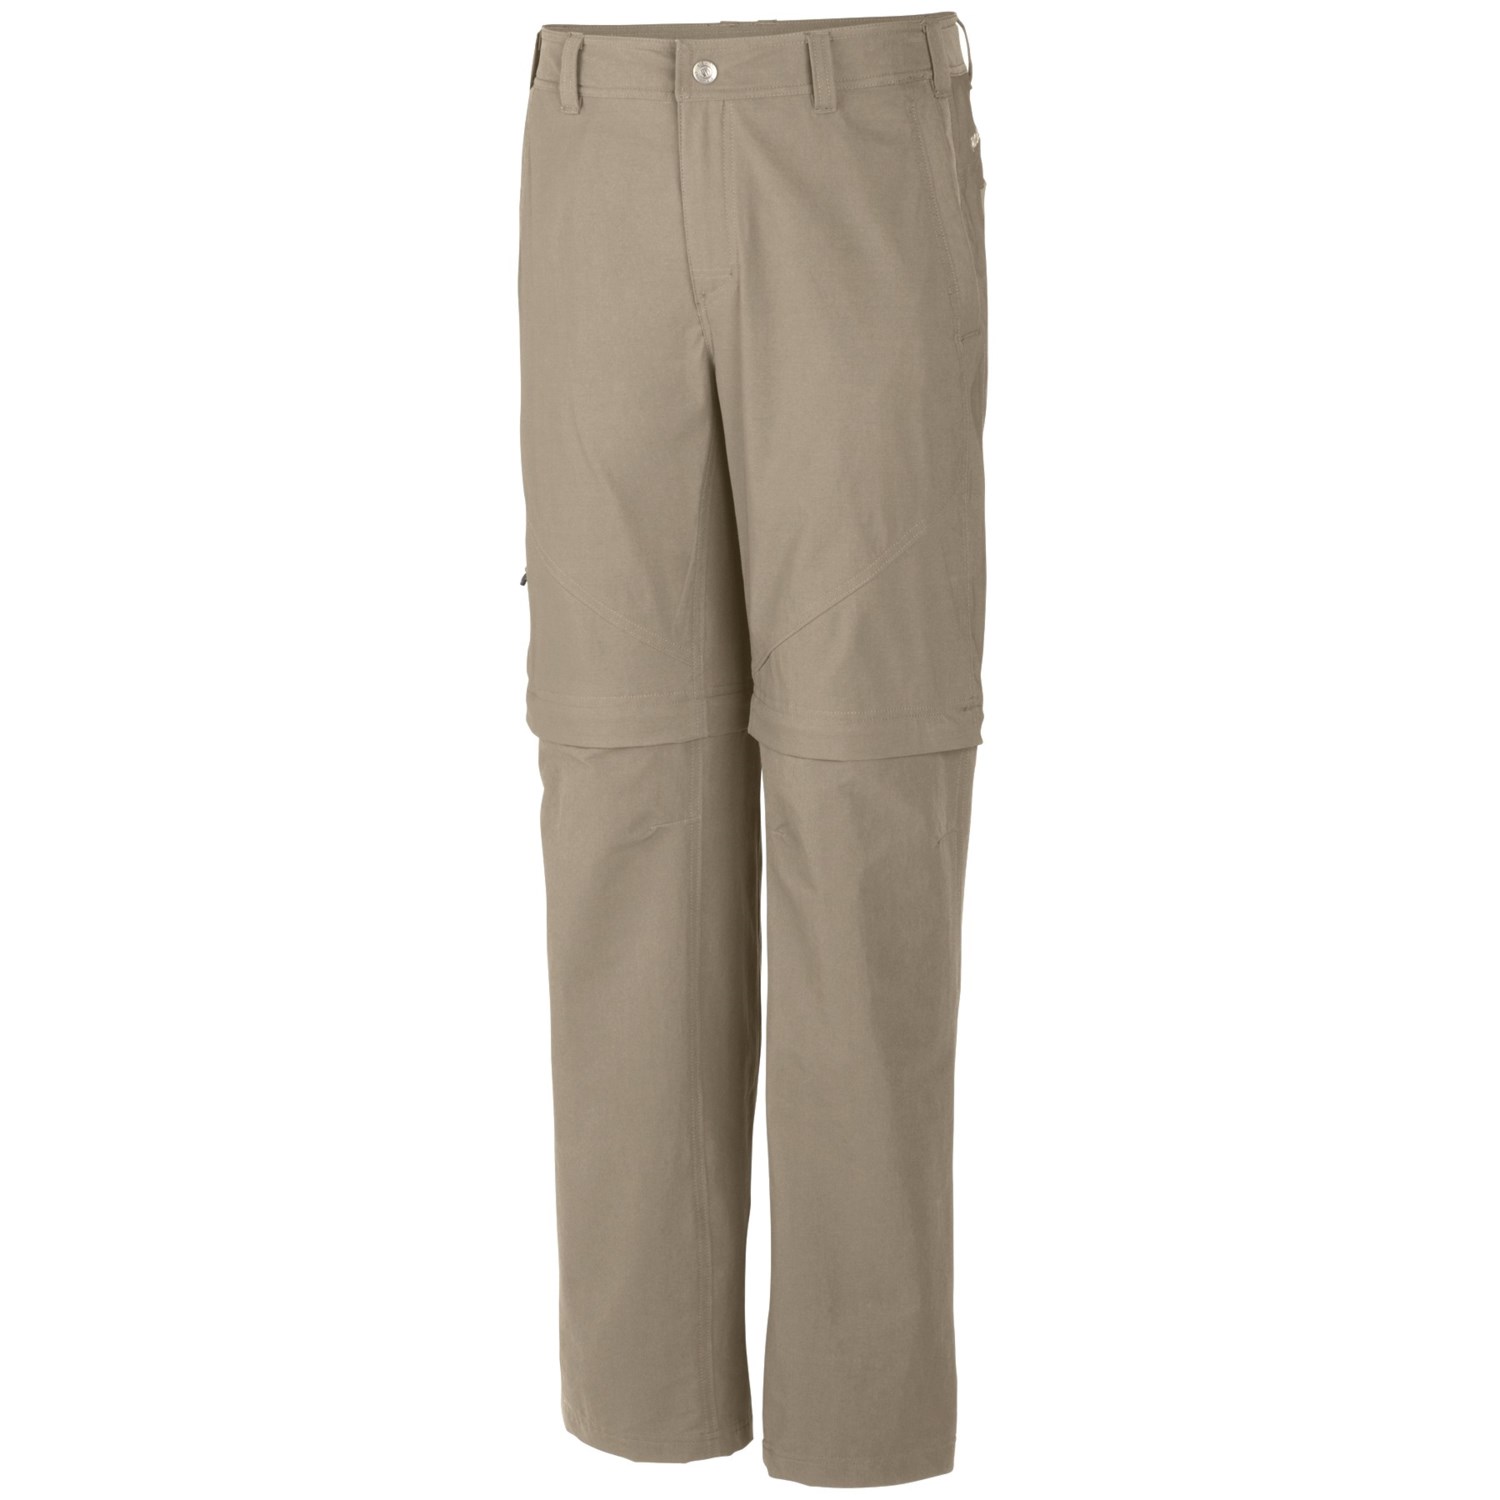 Columbia Sportswear Cool Creek Stretch Convertible Pants - UPF 50 (For Men)